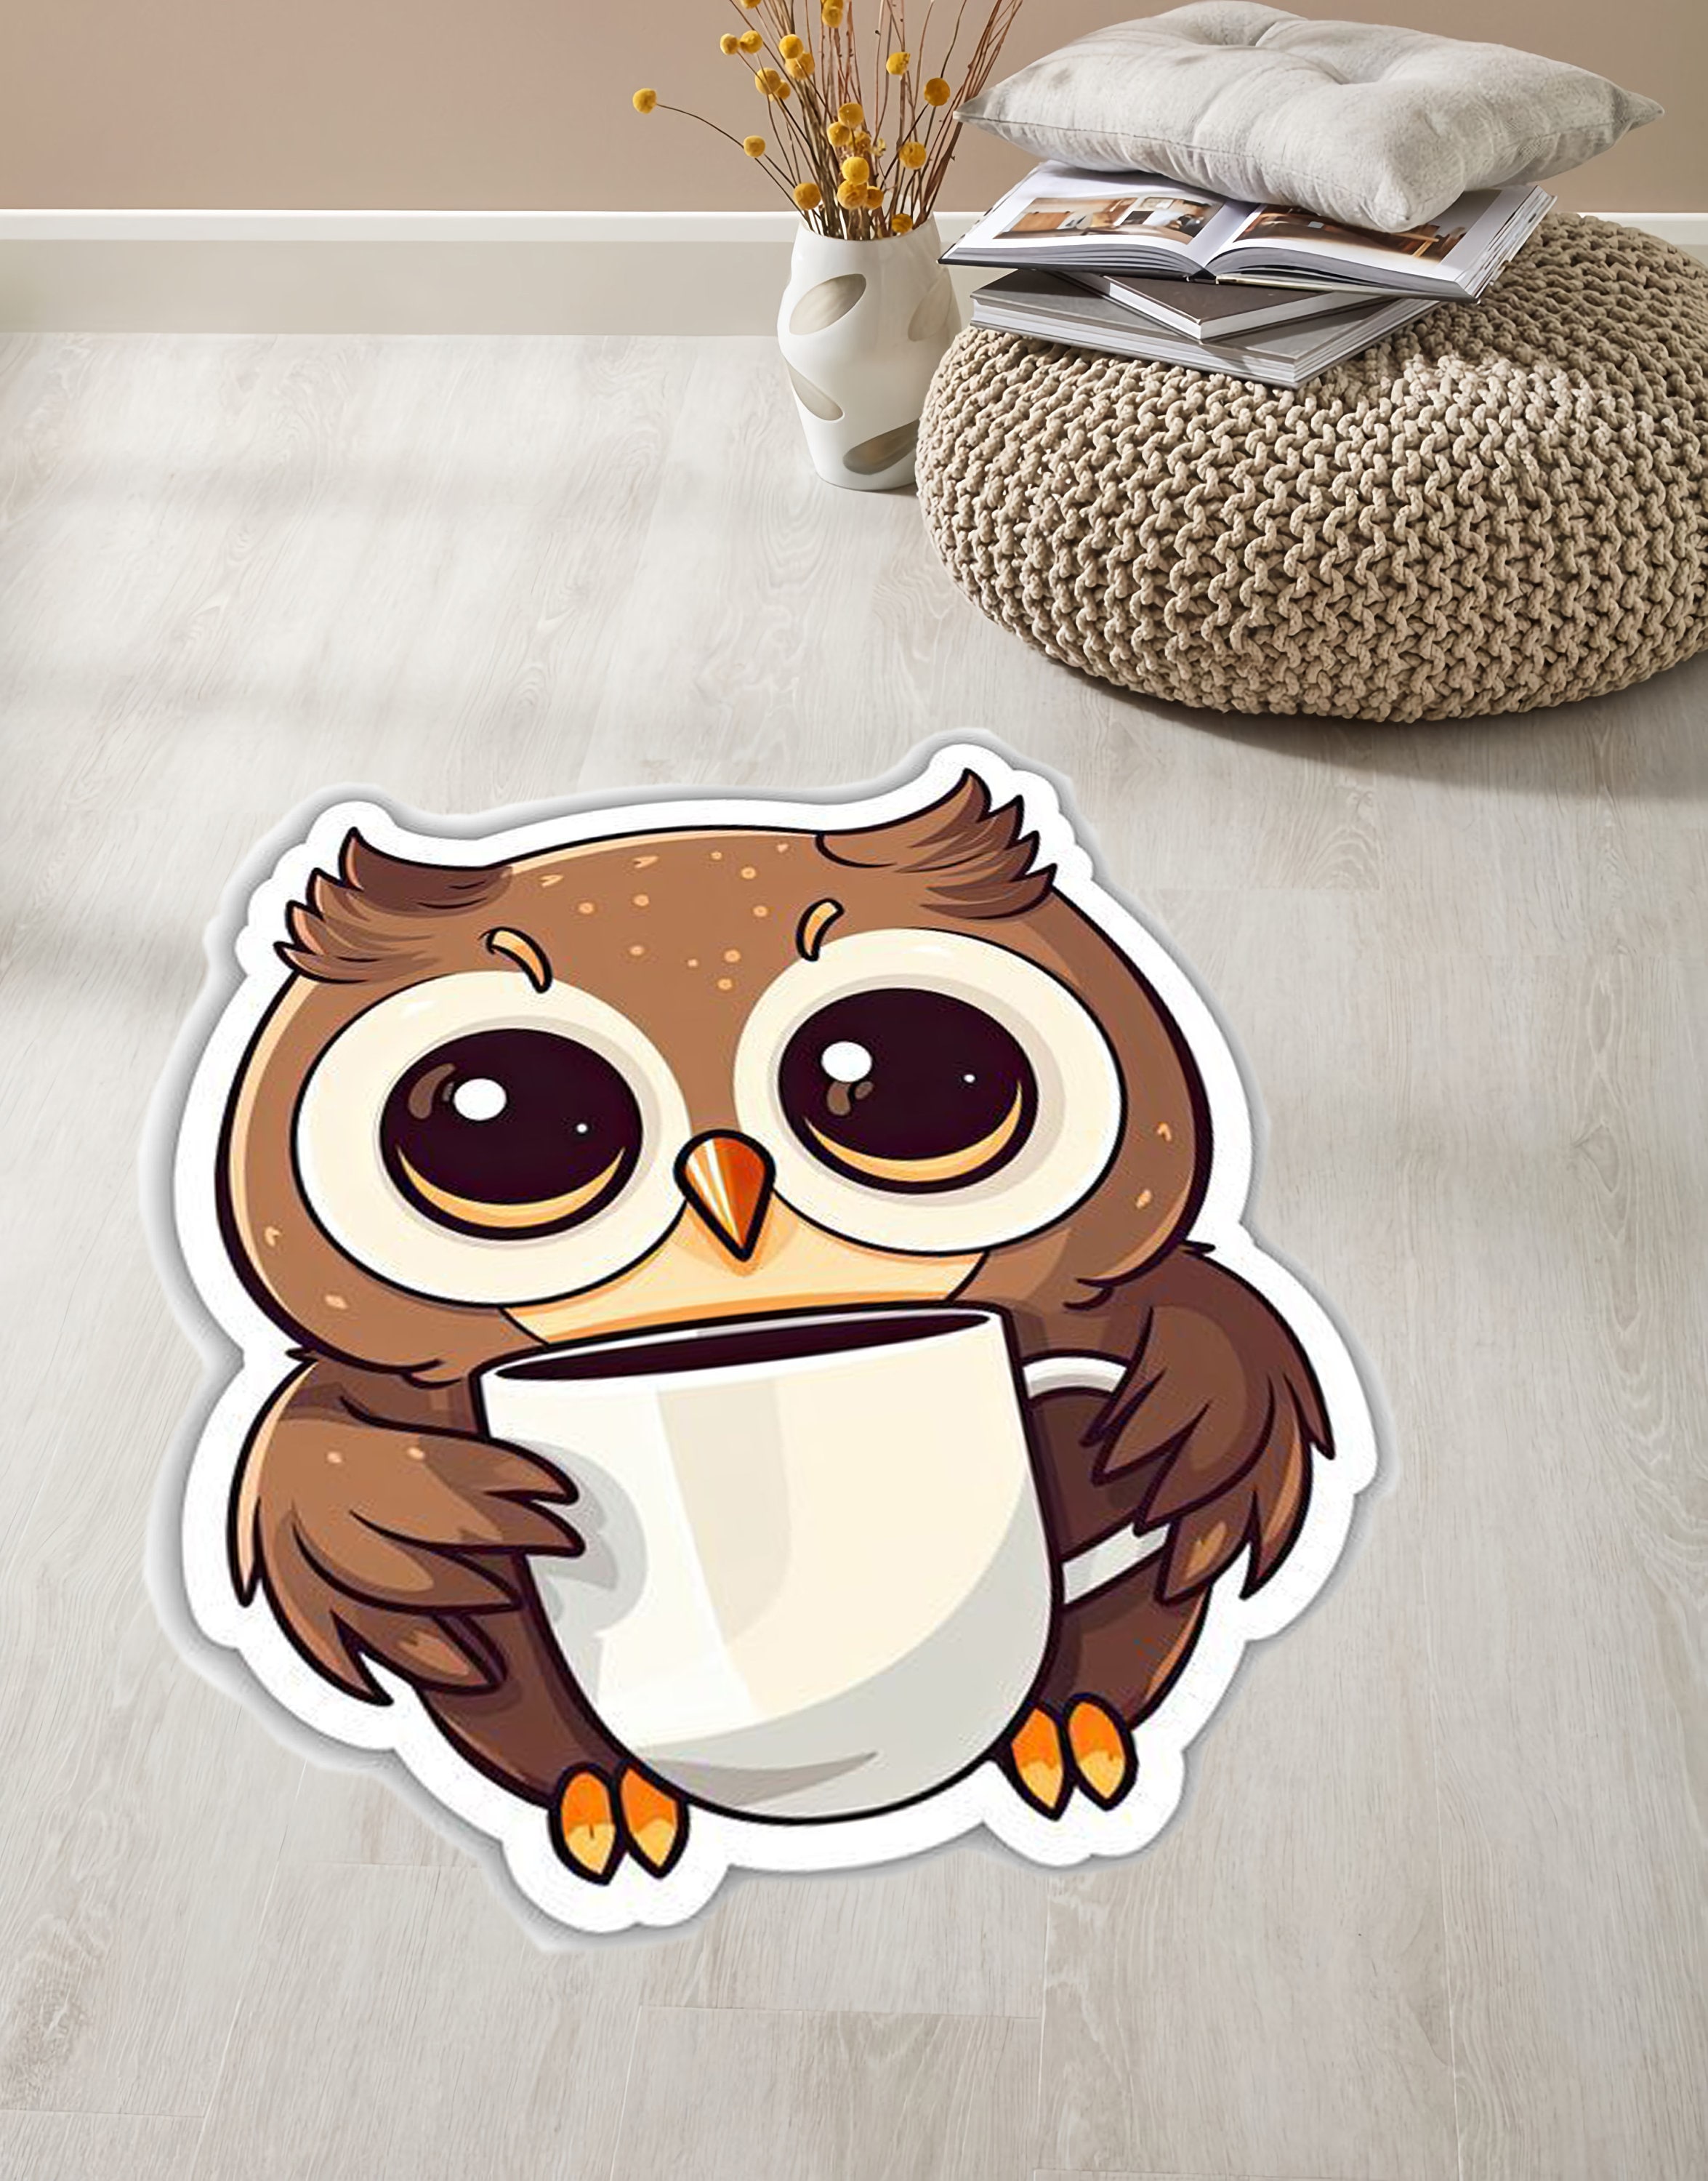 Owl Rug,Owl Pattern Rug,Shaped Rug,Cute Owl Rug,Rugs For Living Room,Rug For Baby Room,Gift For Moth